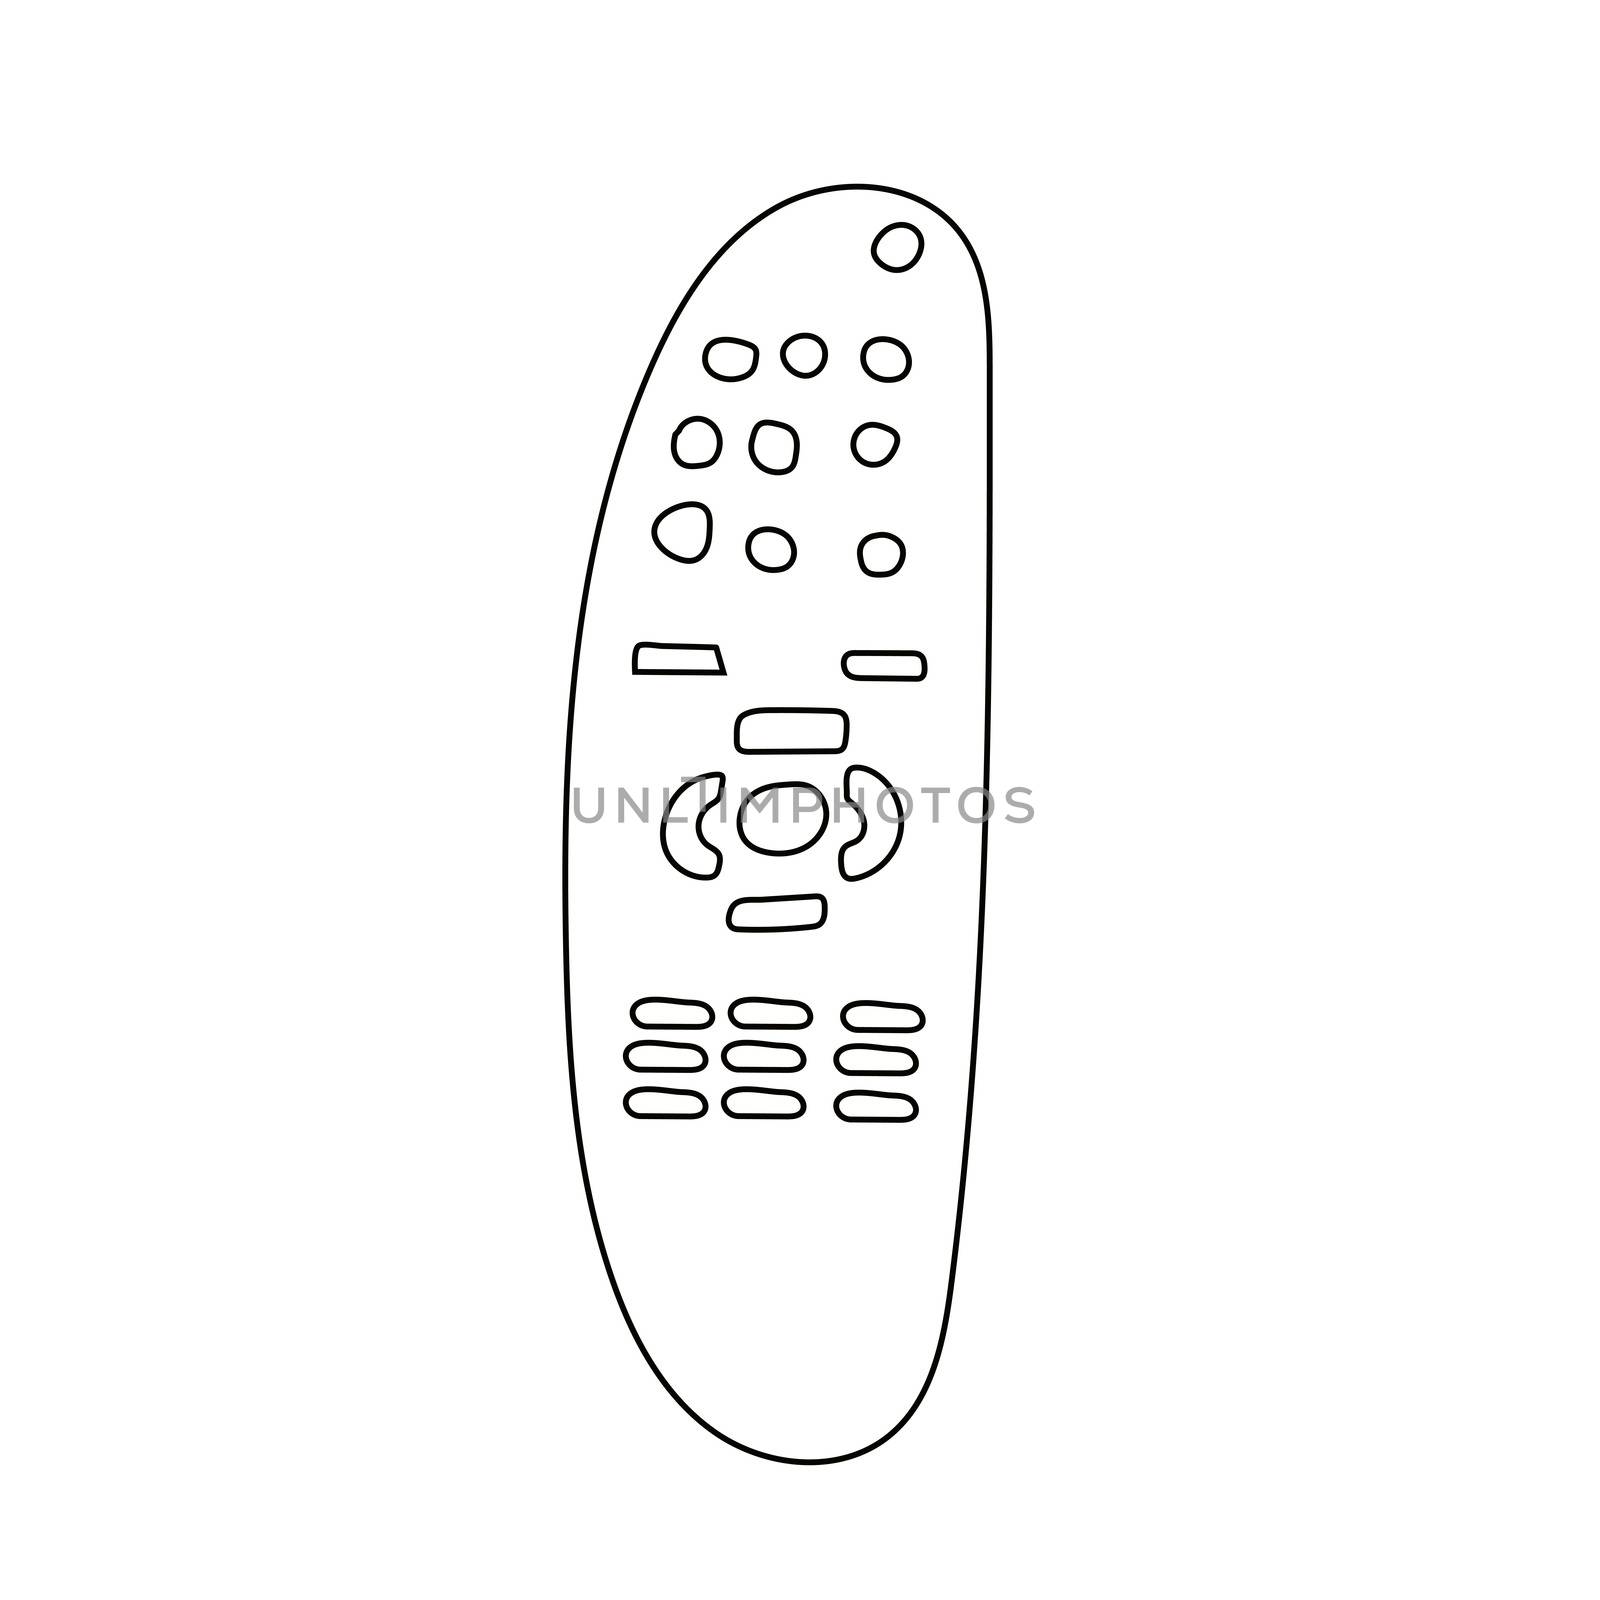 TV remote control doodle. illustration. Buttons